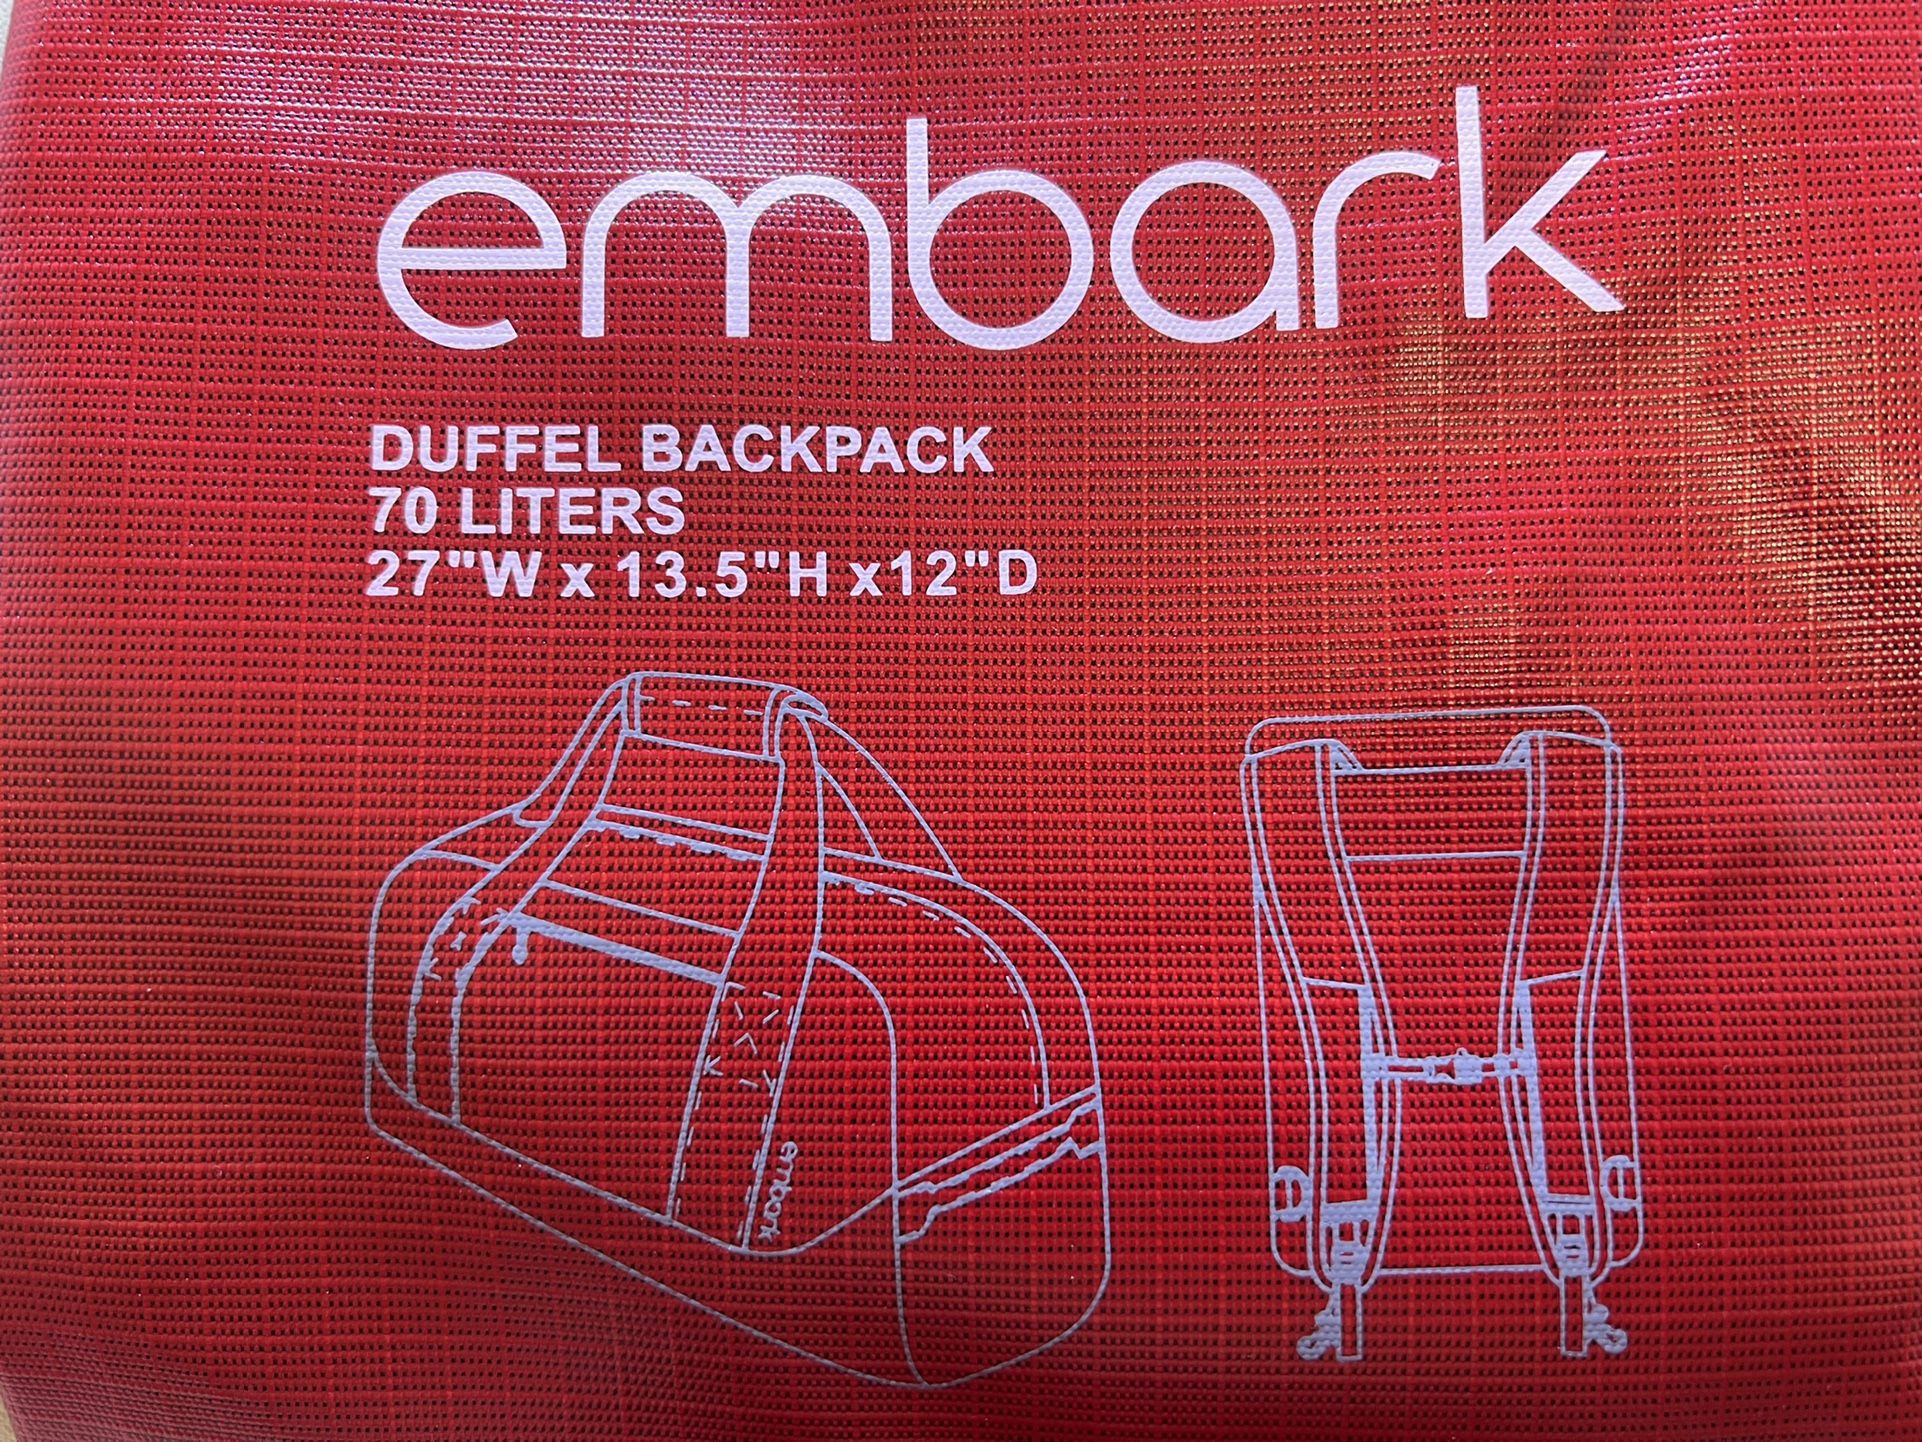 Duffle Backpack- Embark